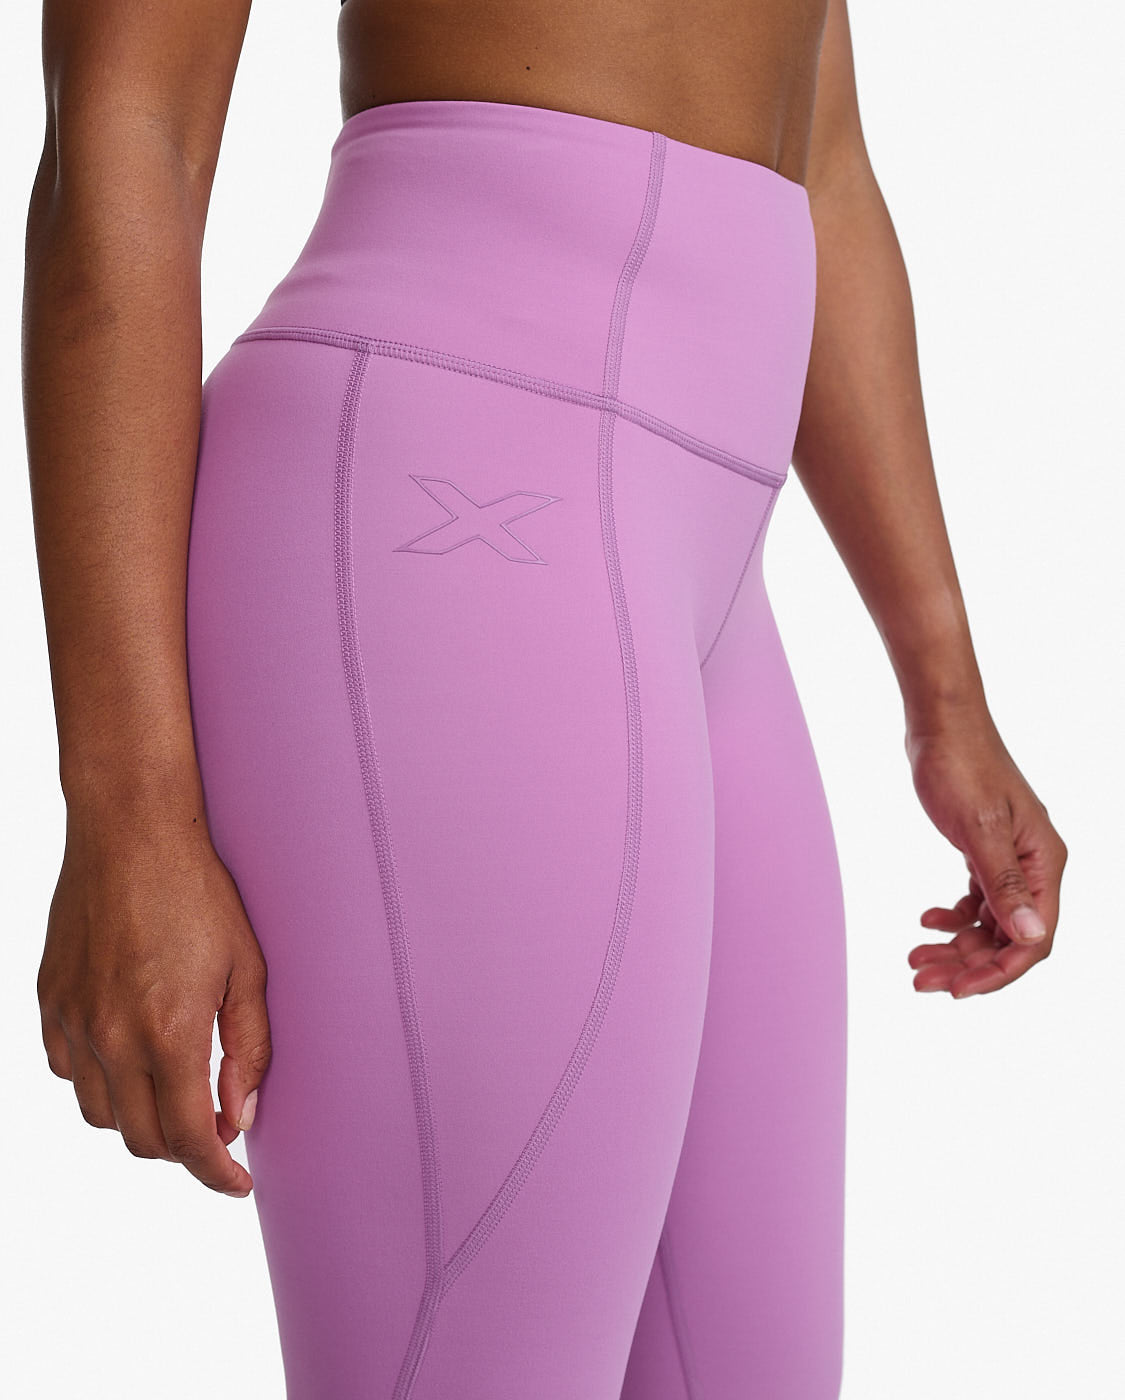 Women's compression leggings 2XU Form Hi-Rise - Woman - Beach